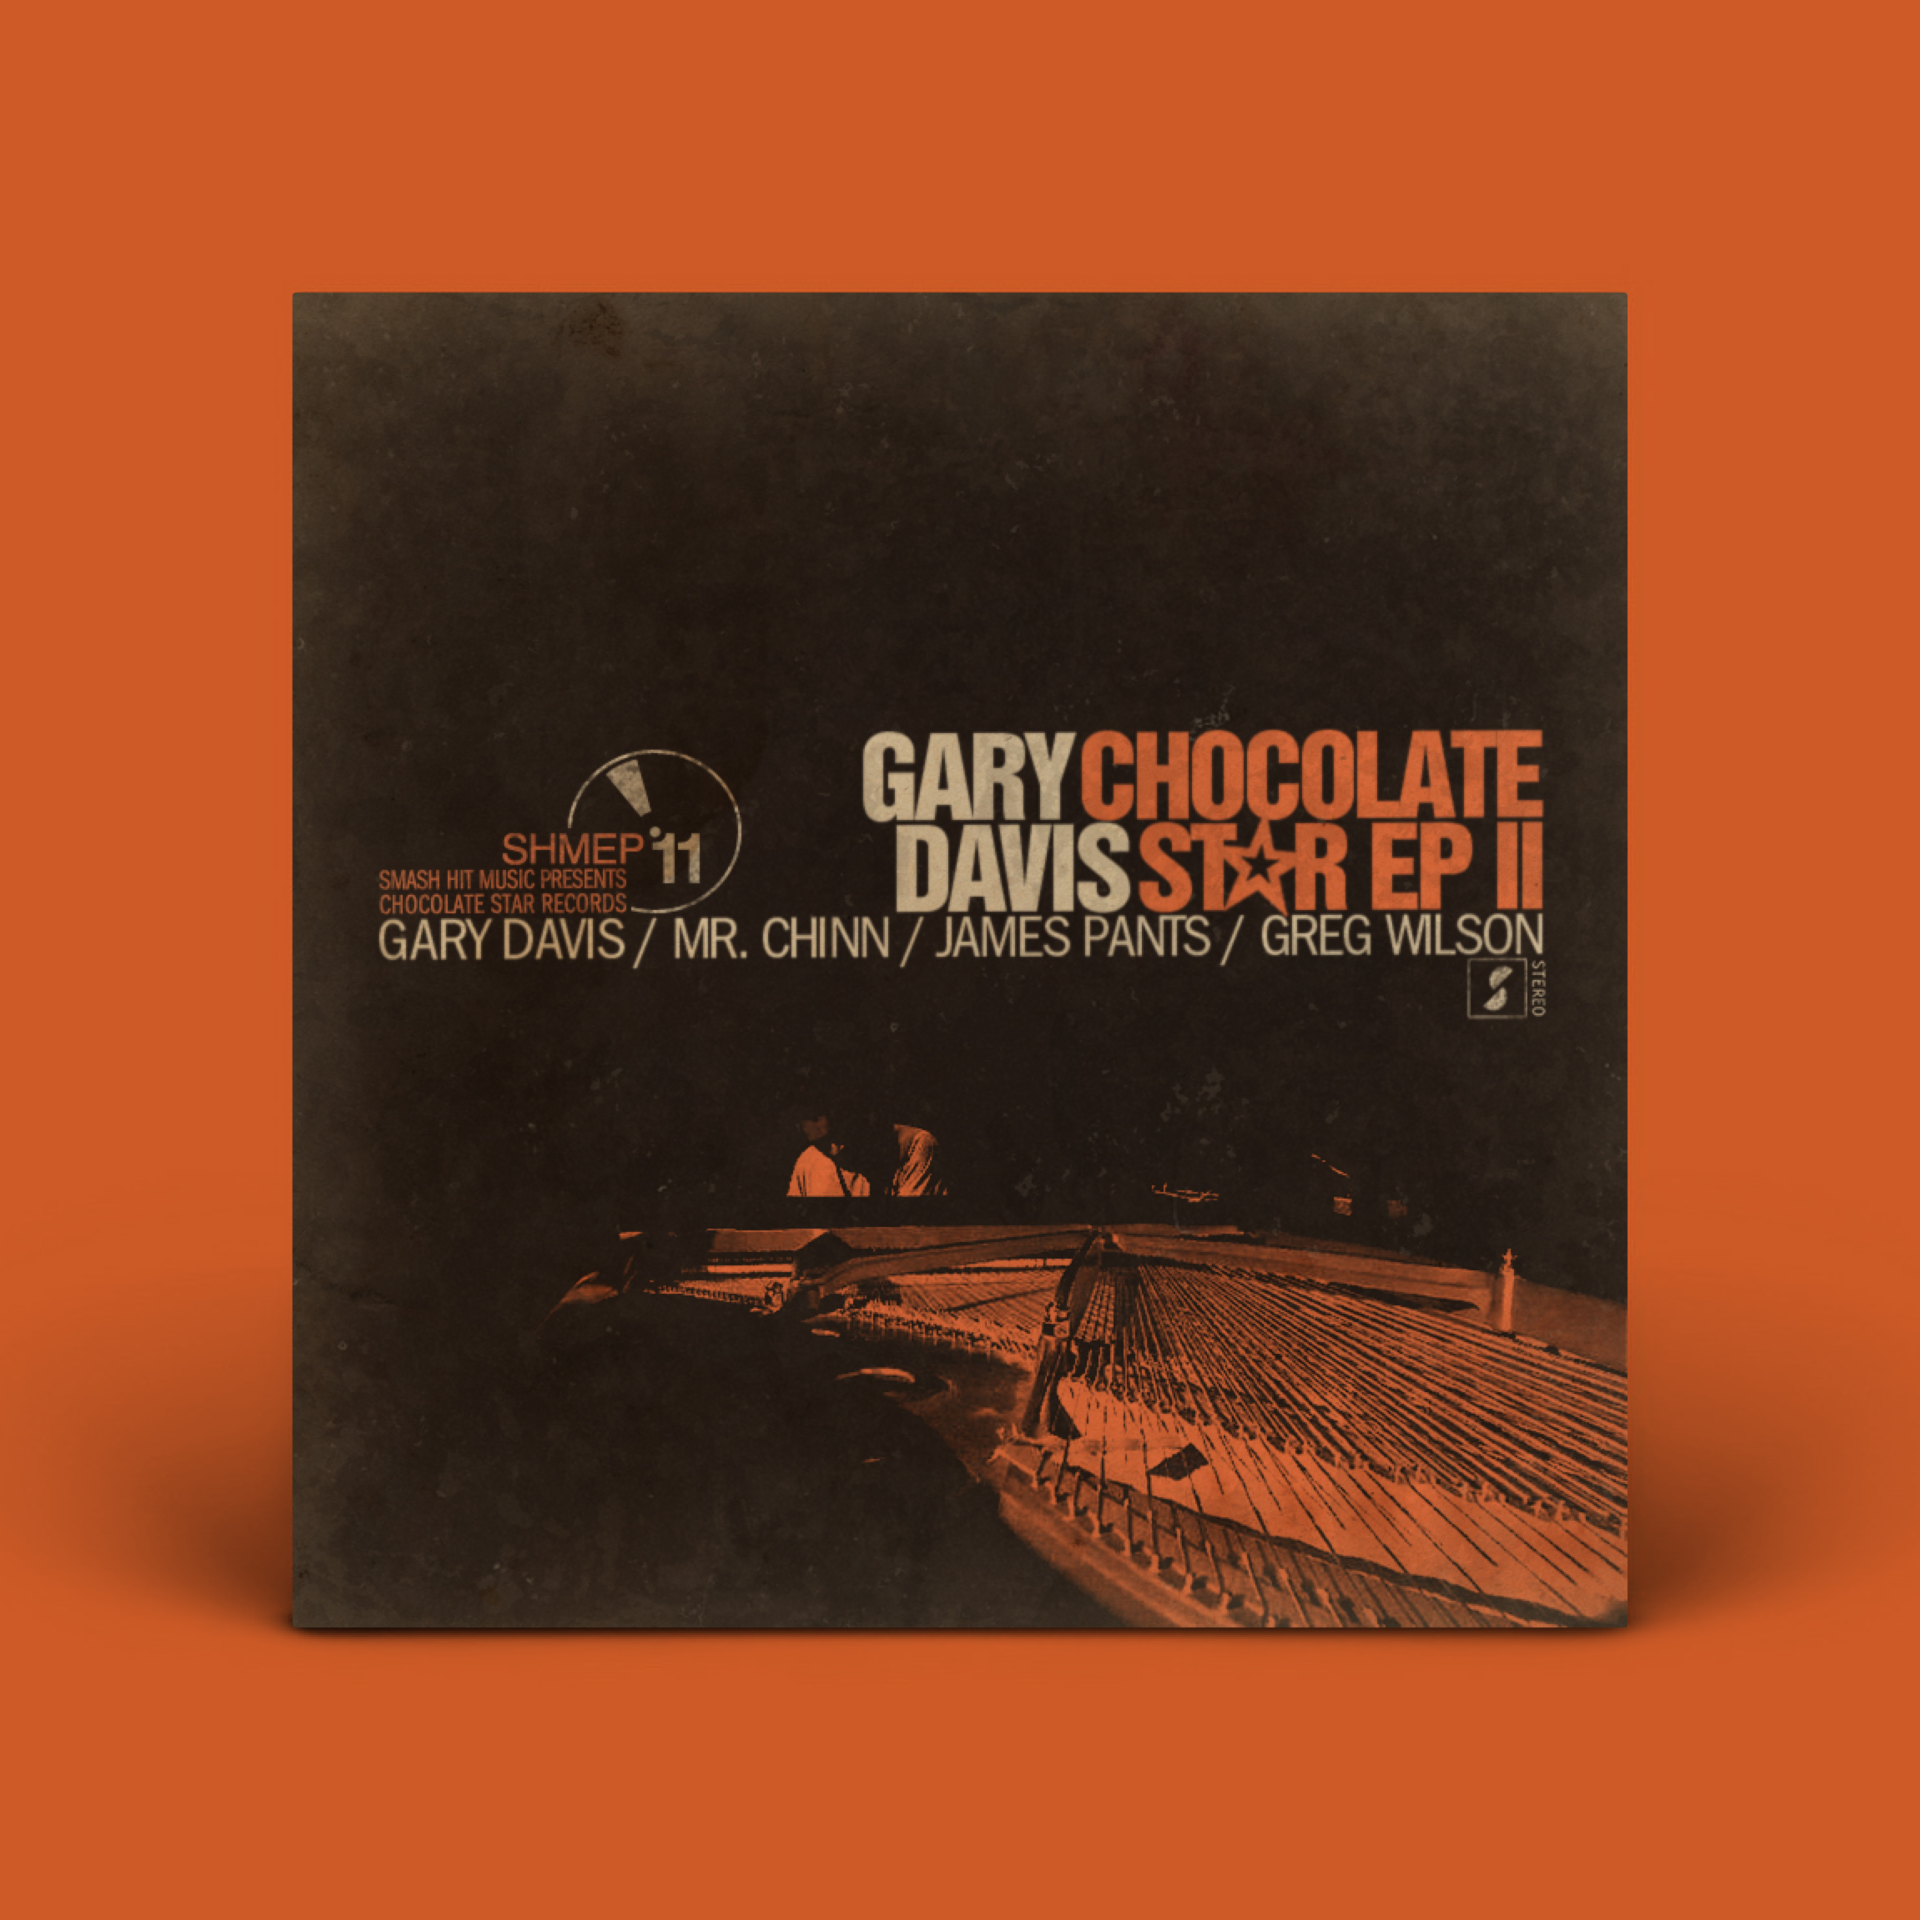 Gary Davis - Chocolate Star EP II